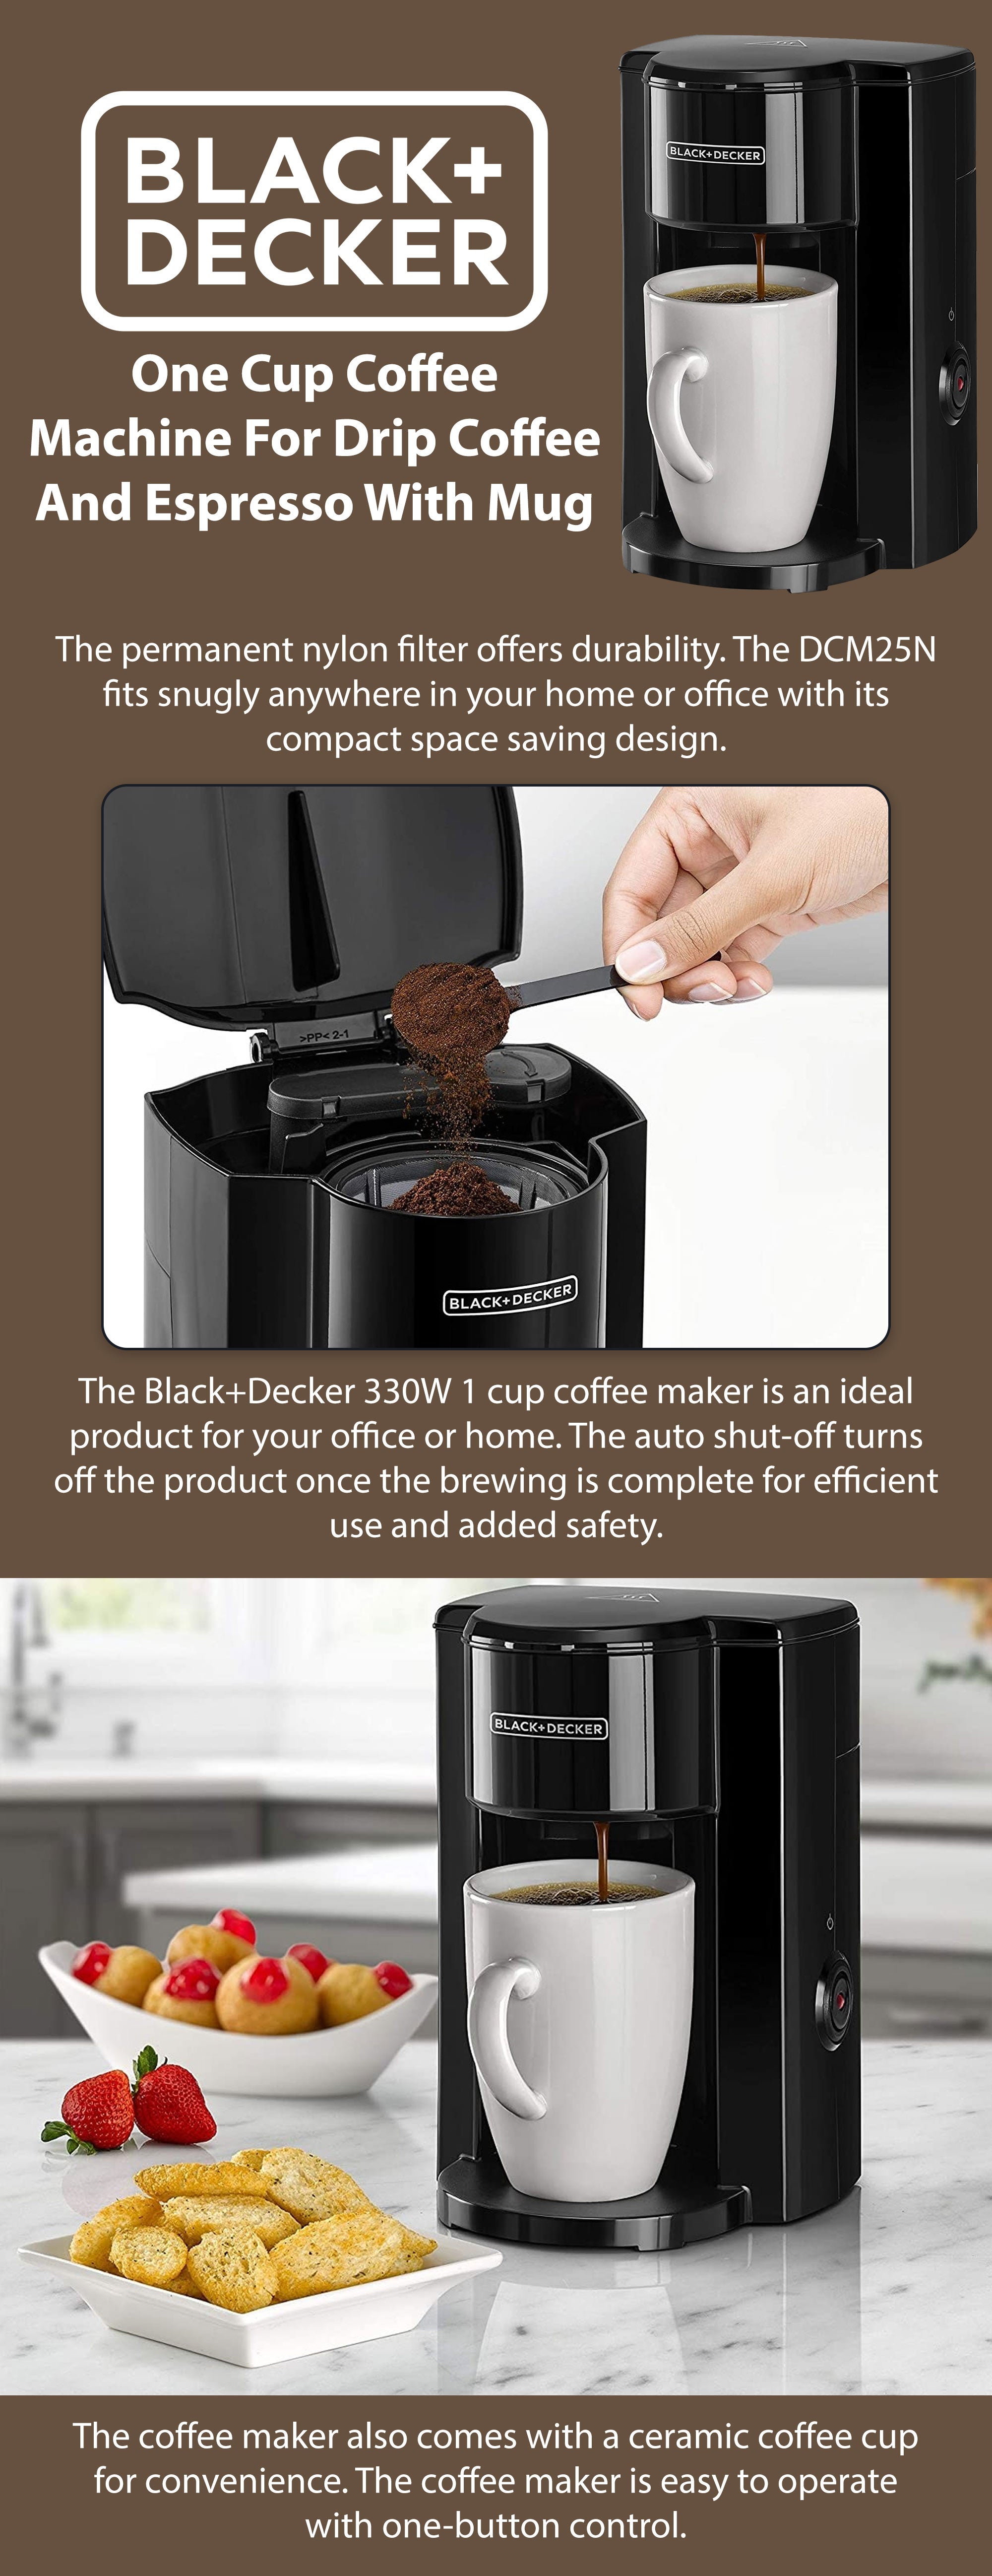 BLACK+DECKER Coffee Machine One Cup Coffee Maker for Drip Coffee And  Espresso With Coffee Mug DCM25N-B5 125.0 ml 350.0 W DCM25N-B5 Jet Black KSA